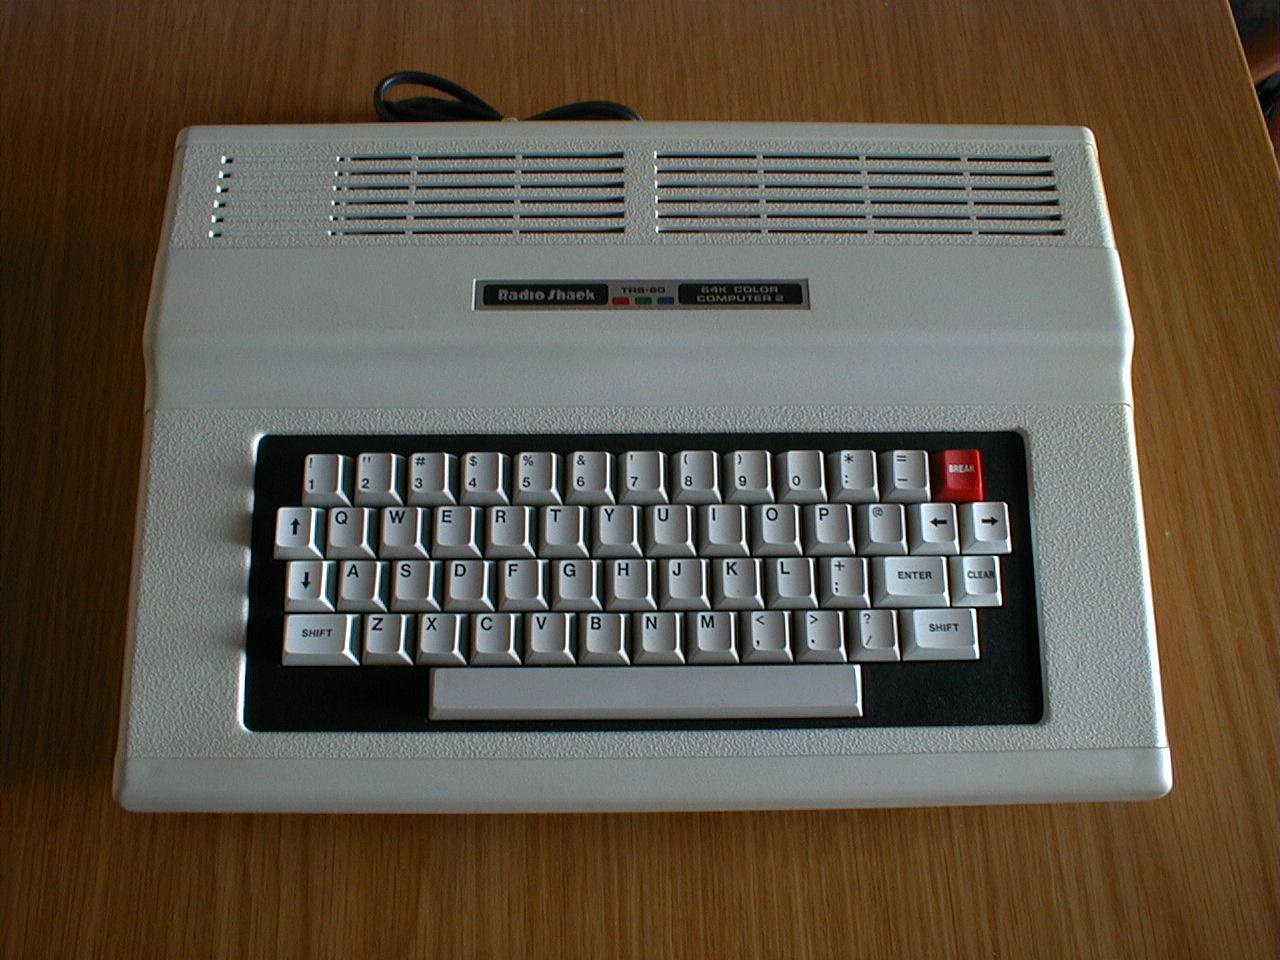 TRS80 Color Computer 2